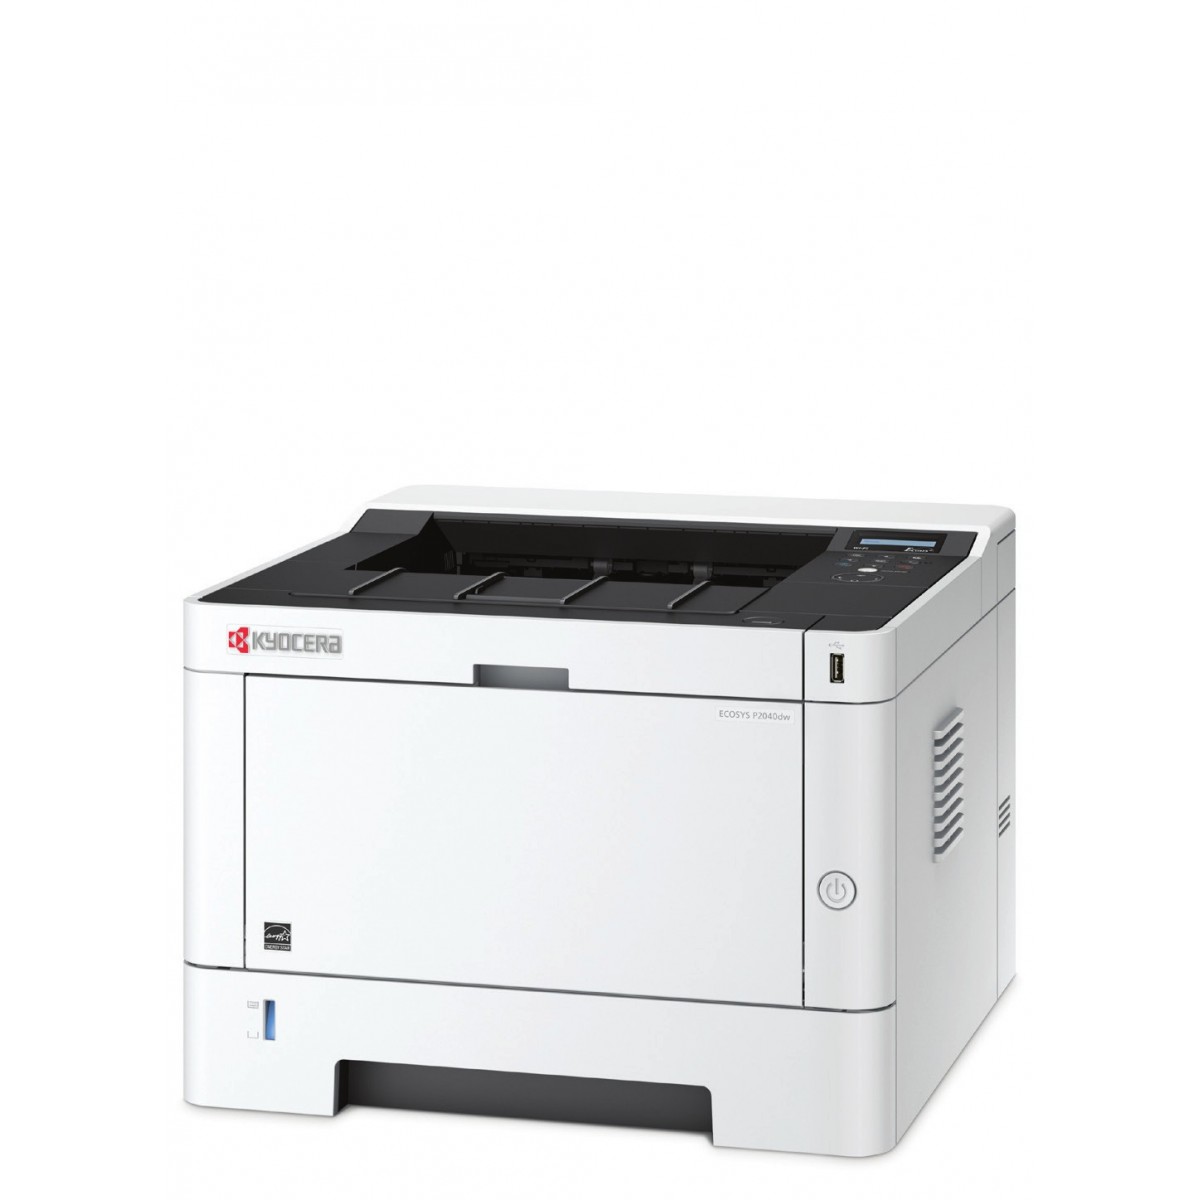 Kyocera ECOSYS P2040dw - Laser - 1200 x 1200 DPI - A4 - 40 ppm - Duplex printing - Network ready